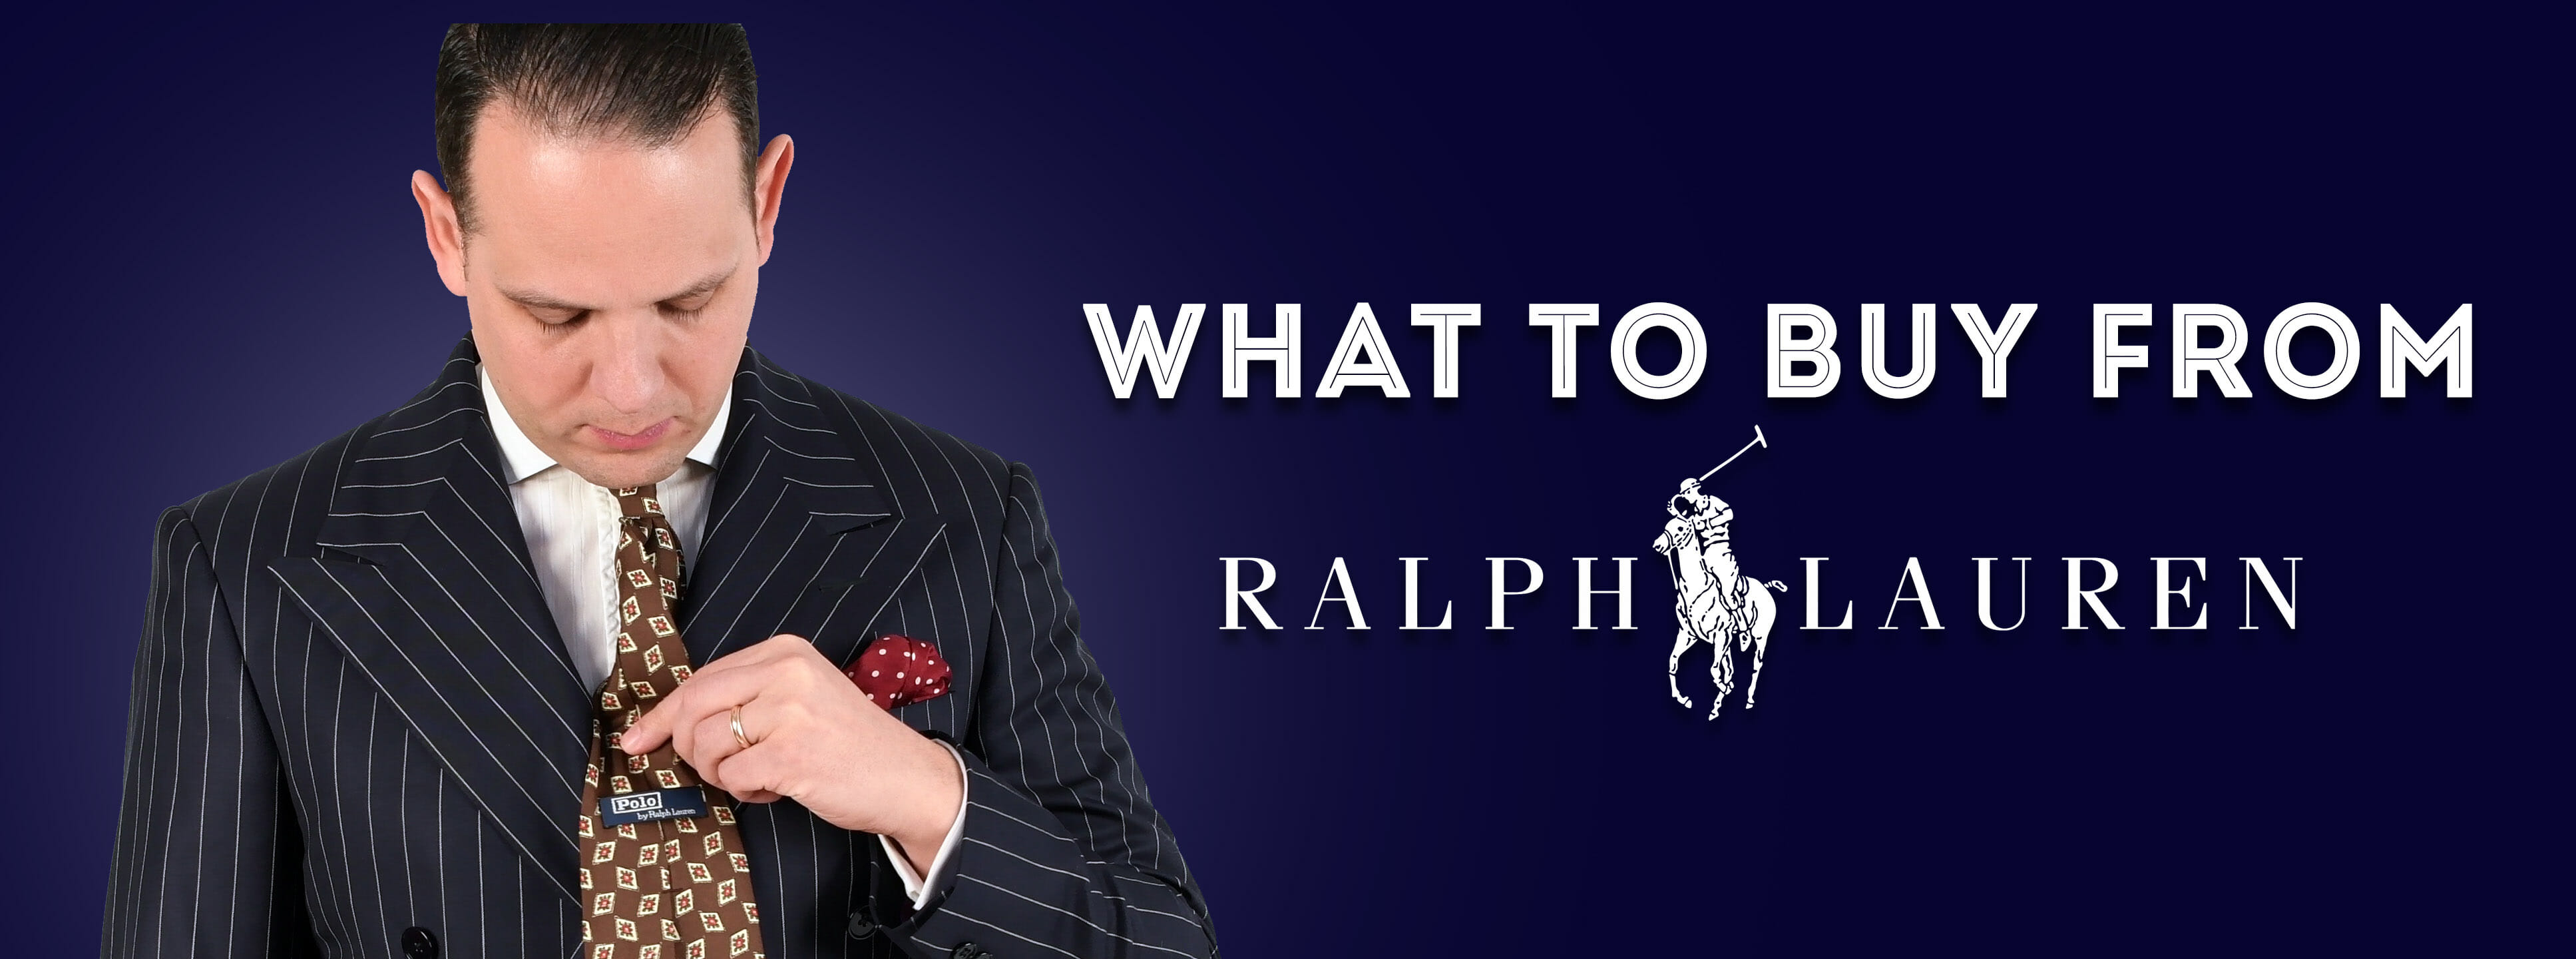 What to Buy from Ralph Lauren 